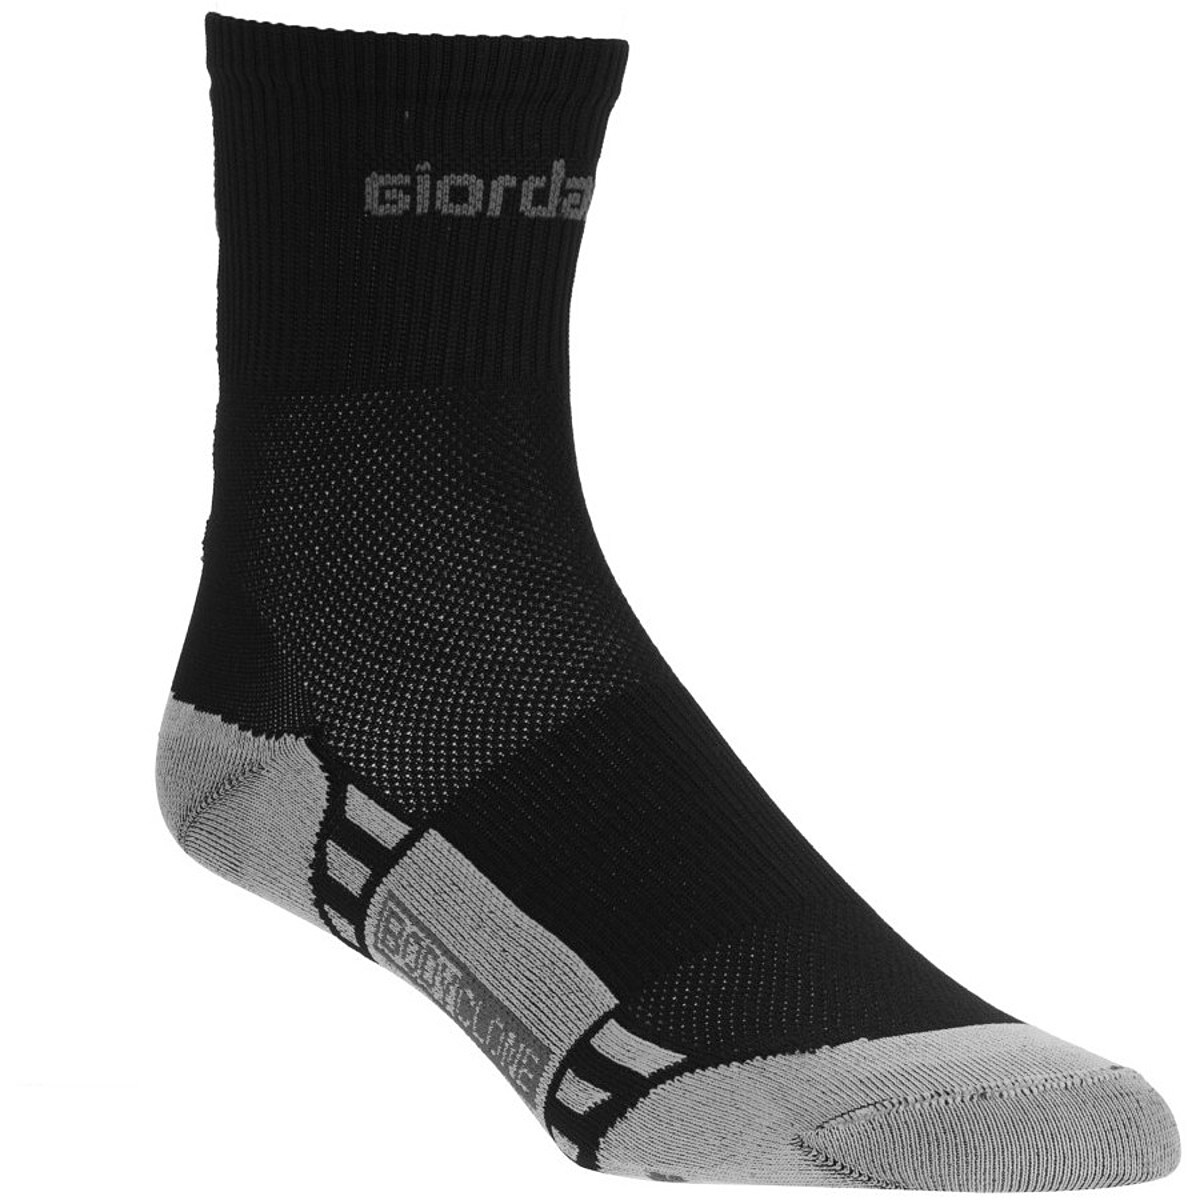 Giordana FormaRed Carbon Mid Cuff Socks Mens